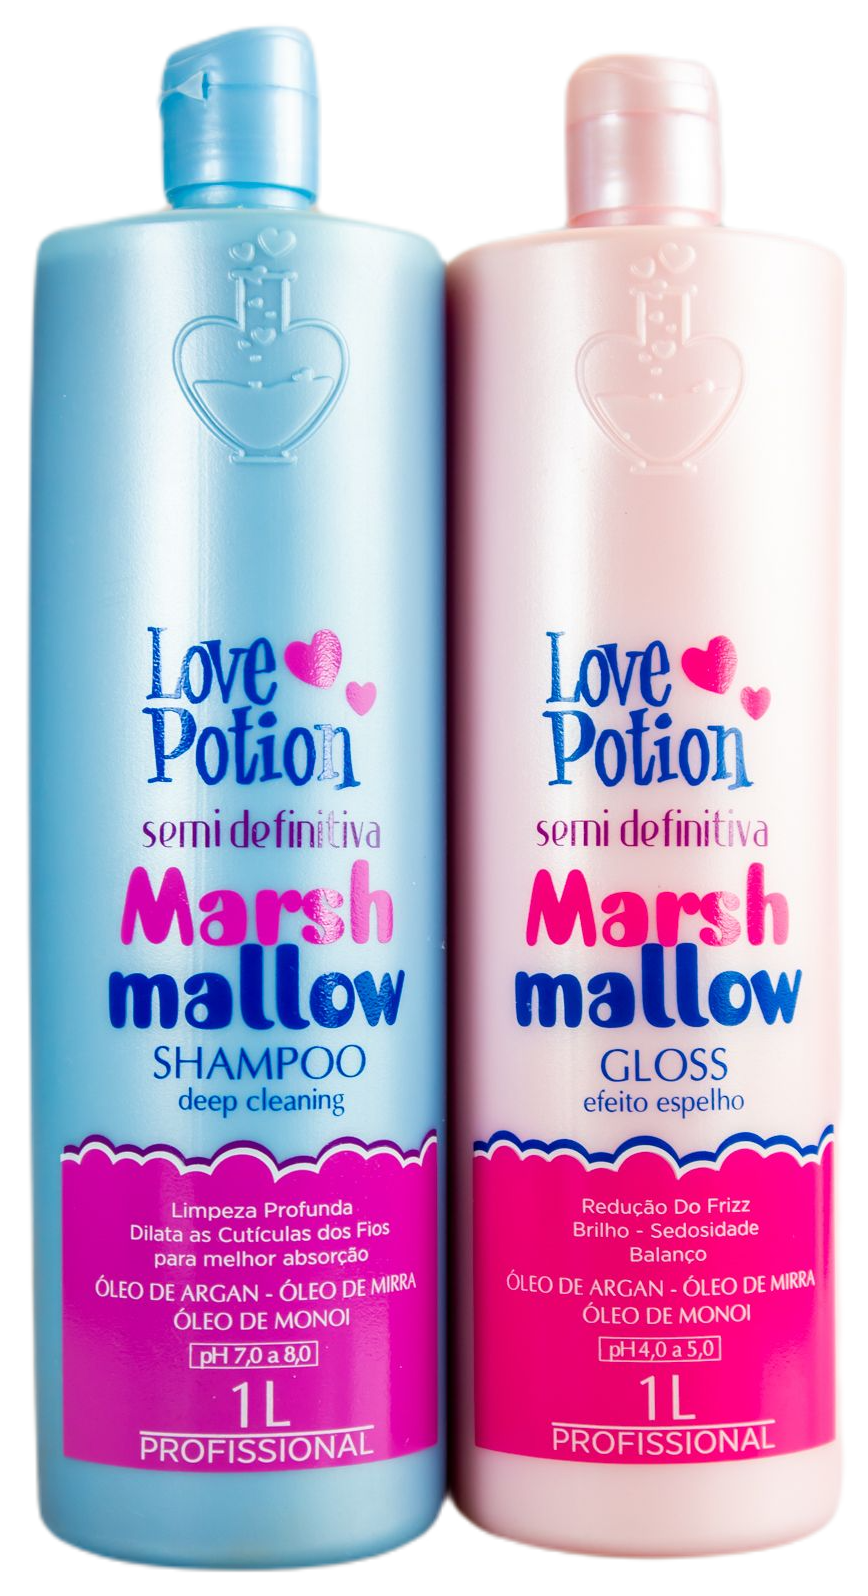 Love Potion Brazilian Keratin Treatment Semi Definitive Marshmallow Progressive Argan Mirra Monoi 2x1L - Love Potion